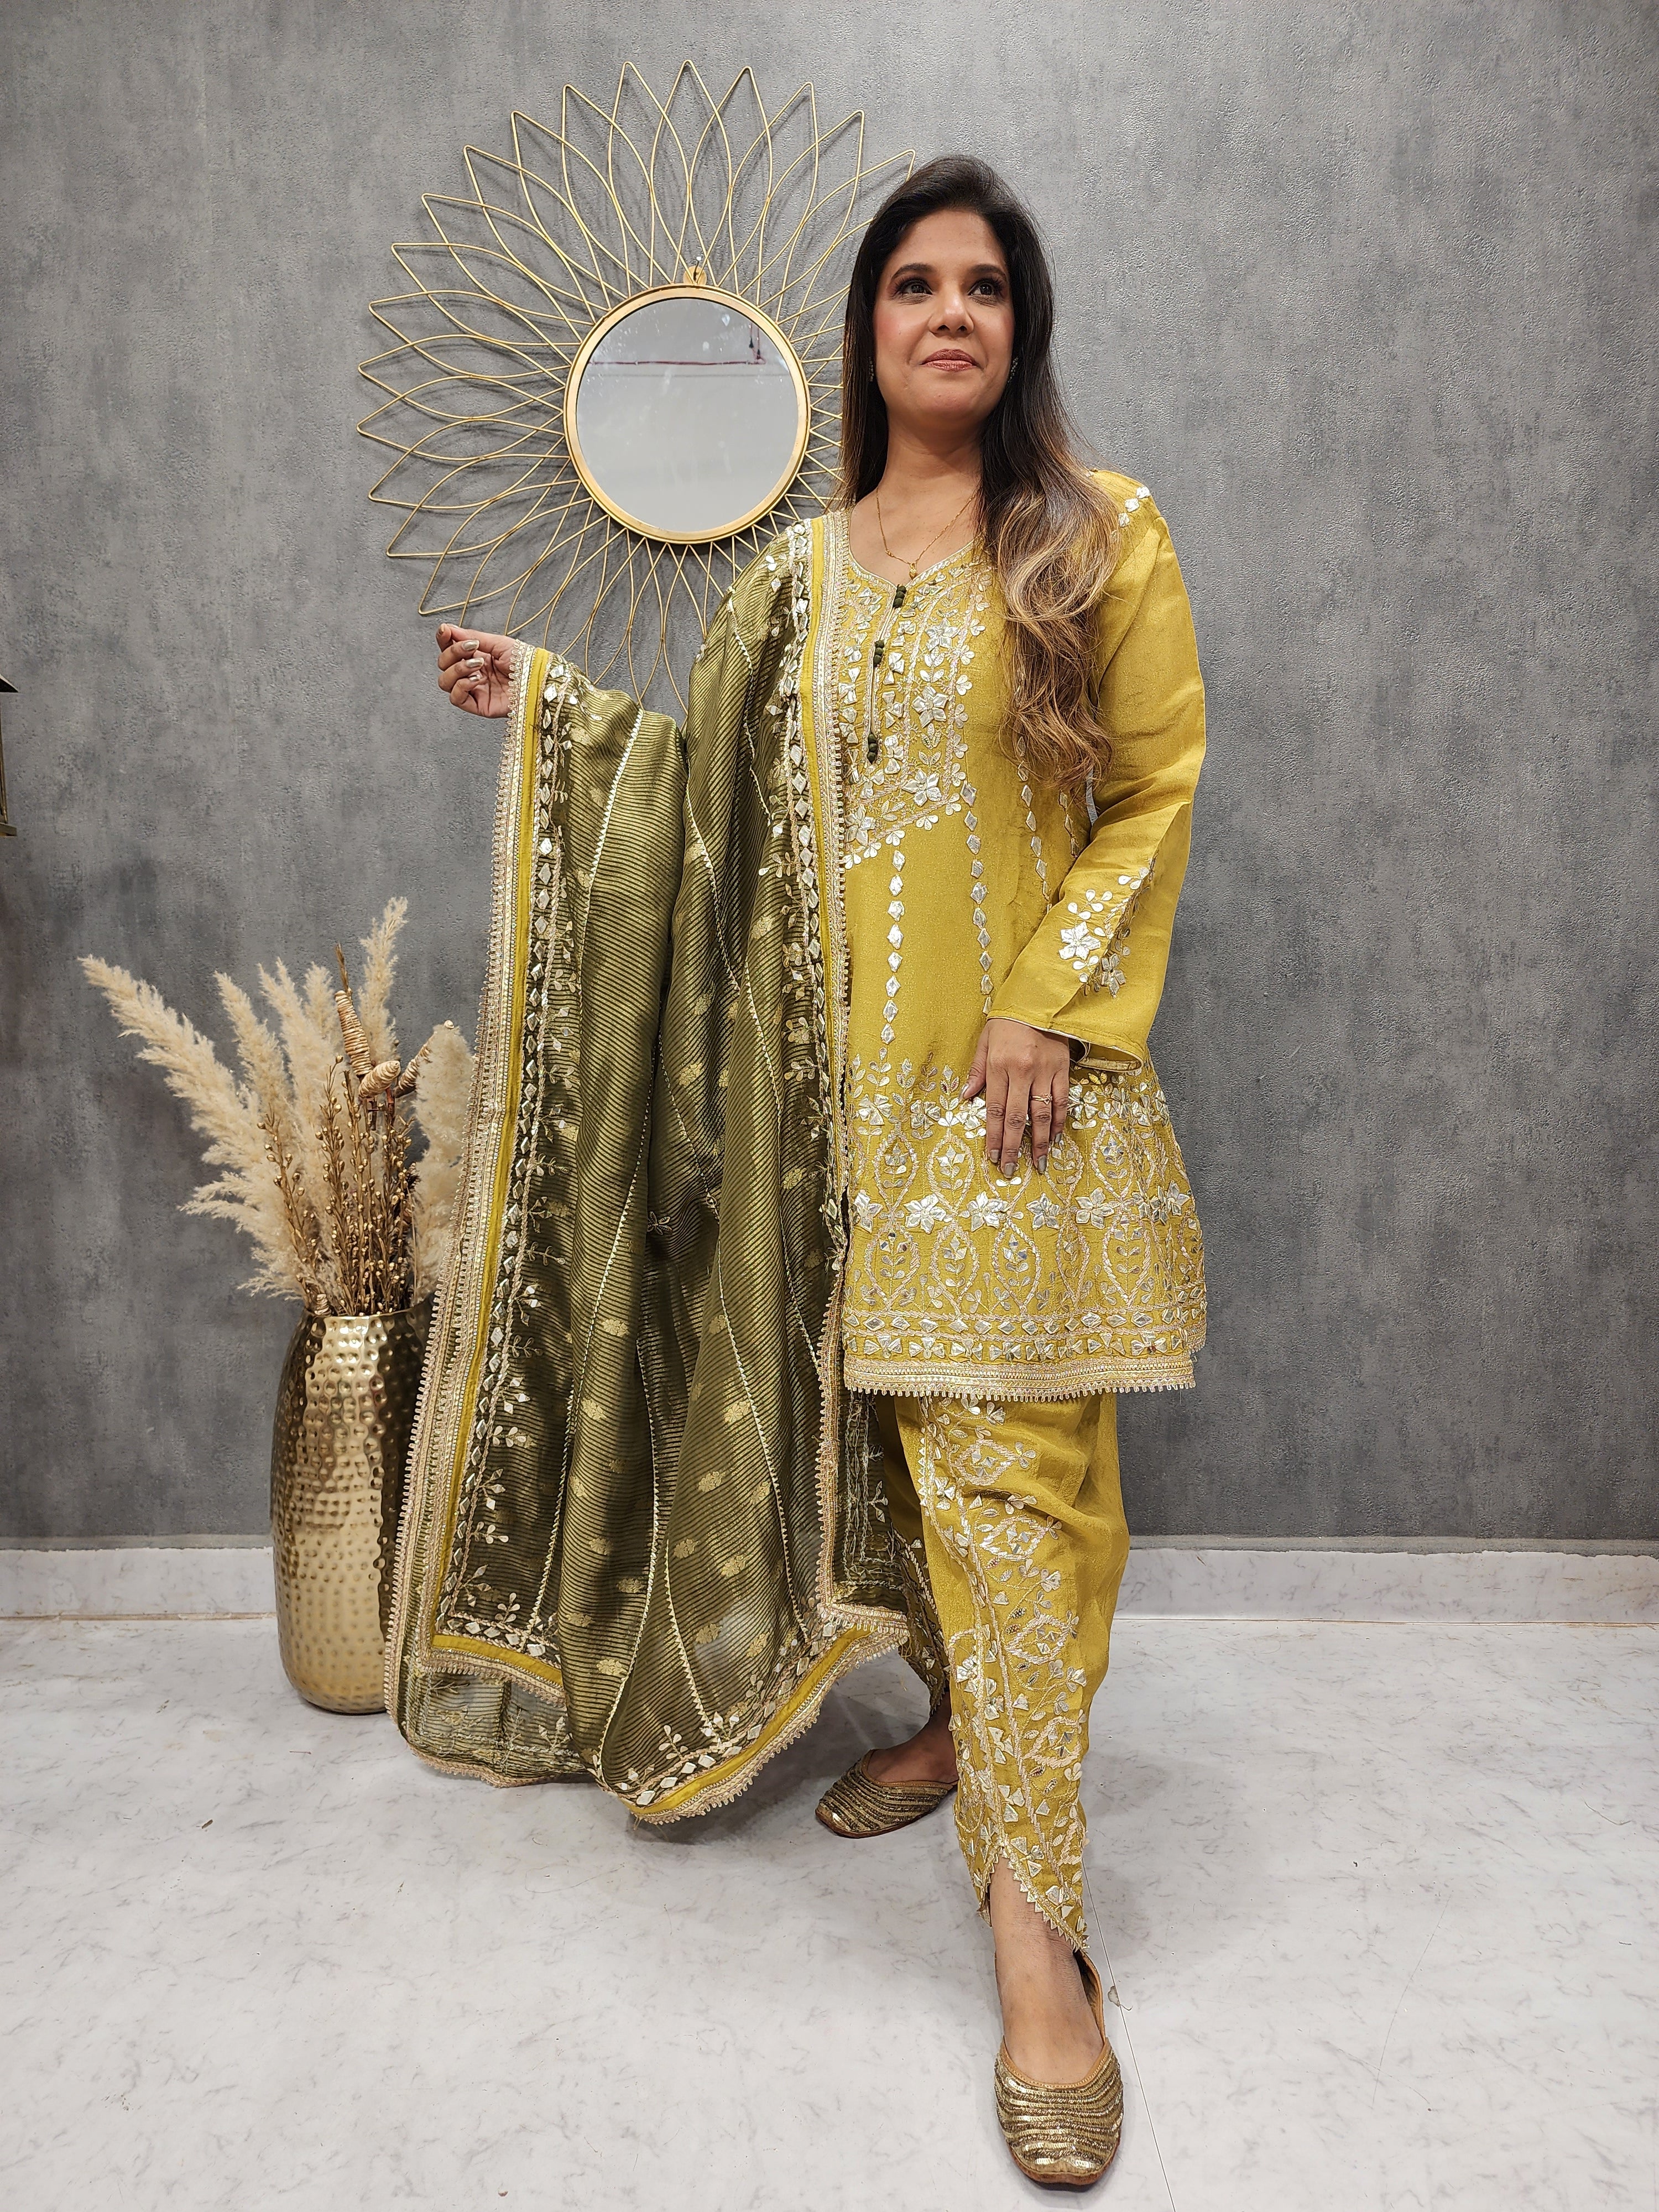 Haldi Mehndi Bridal Dress Ideas – The Odd Onee